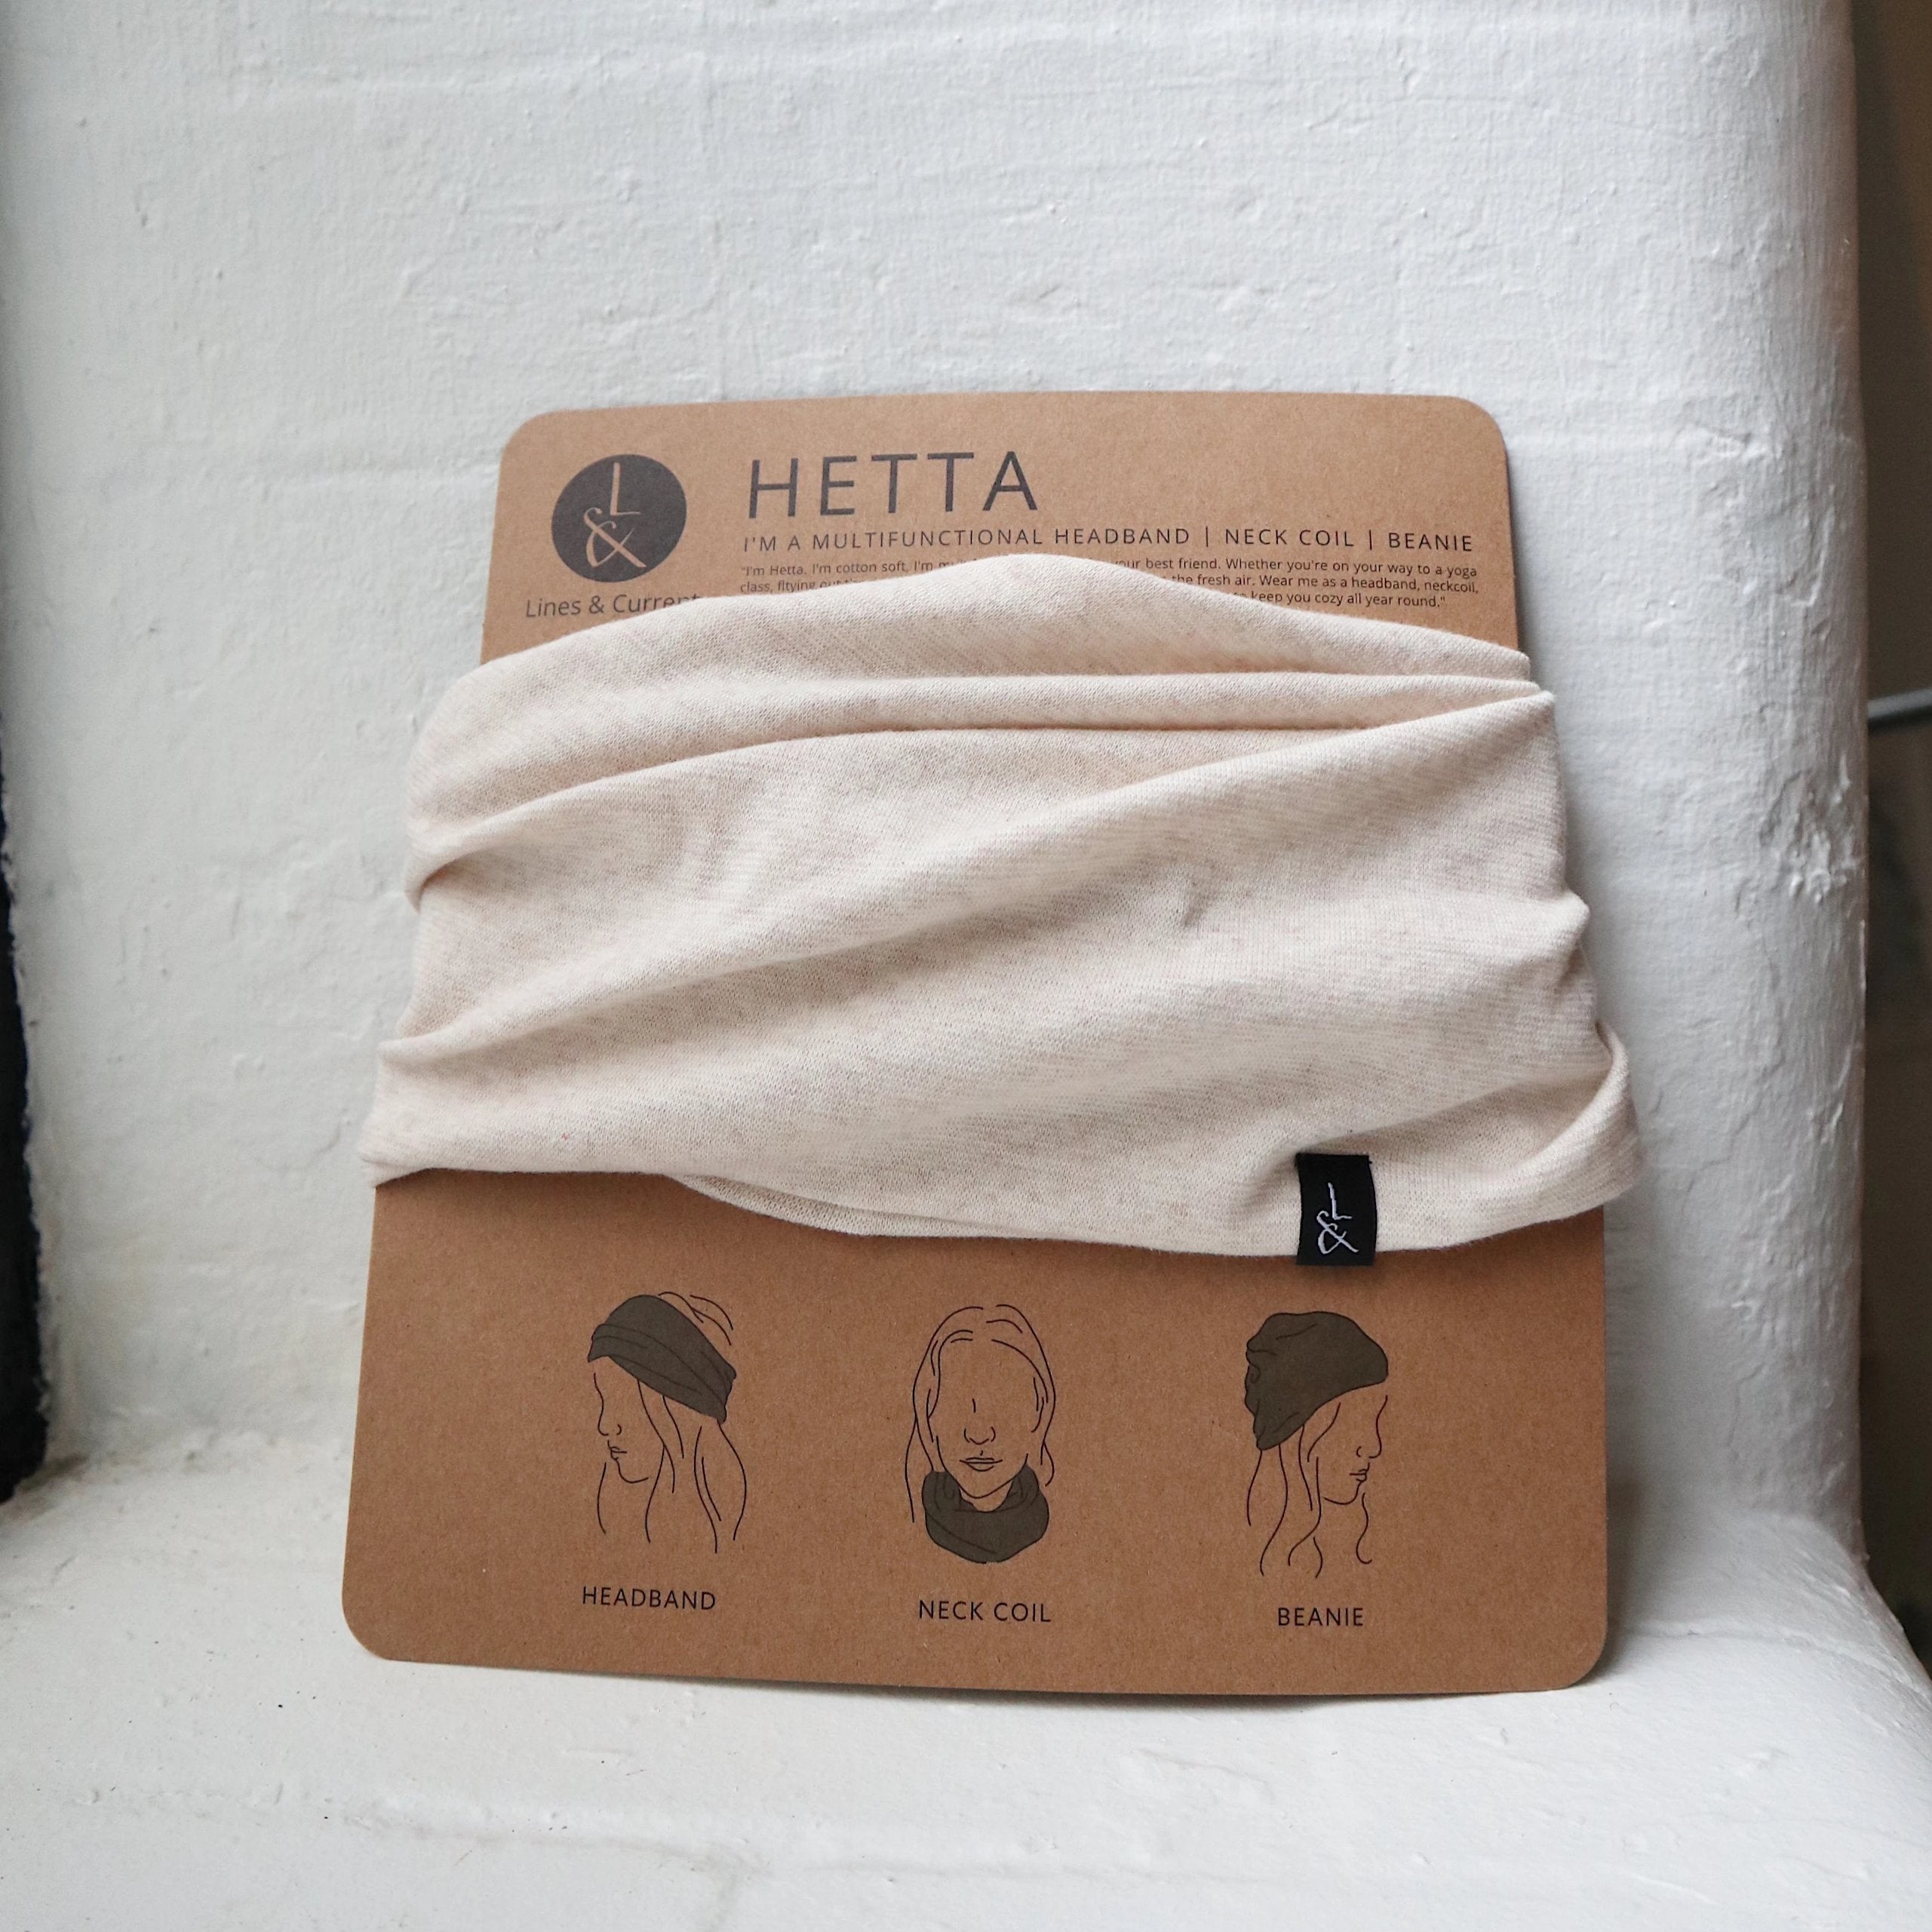 'Hetta' Headband | Neck coil | Beanie | Bleached Blonde - Lines & Current